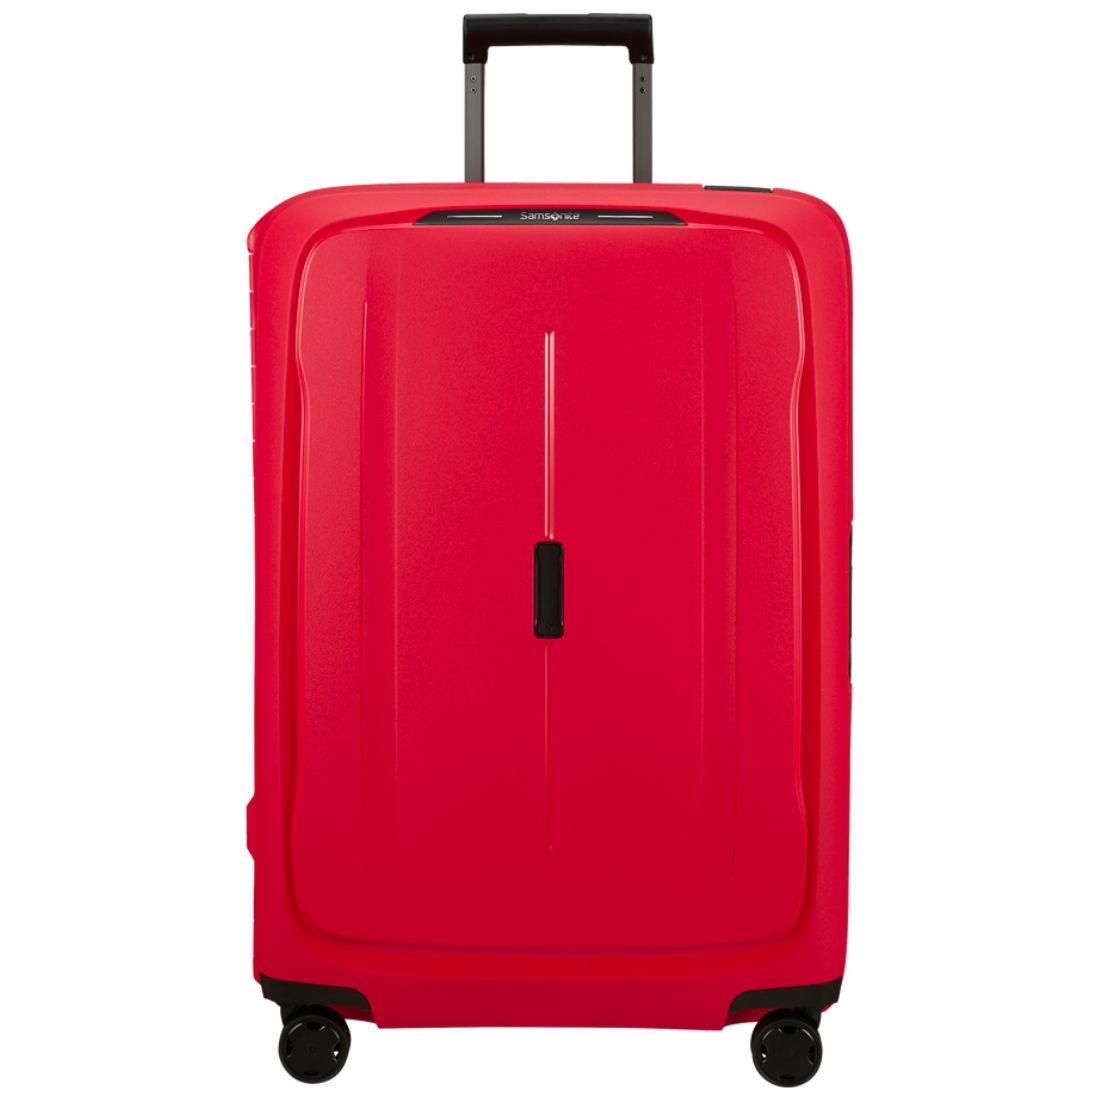 Voorkant Samsonite Essent 75 koffer rood #kleur_rood